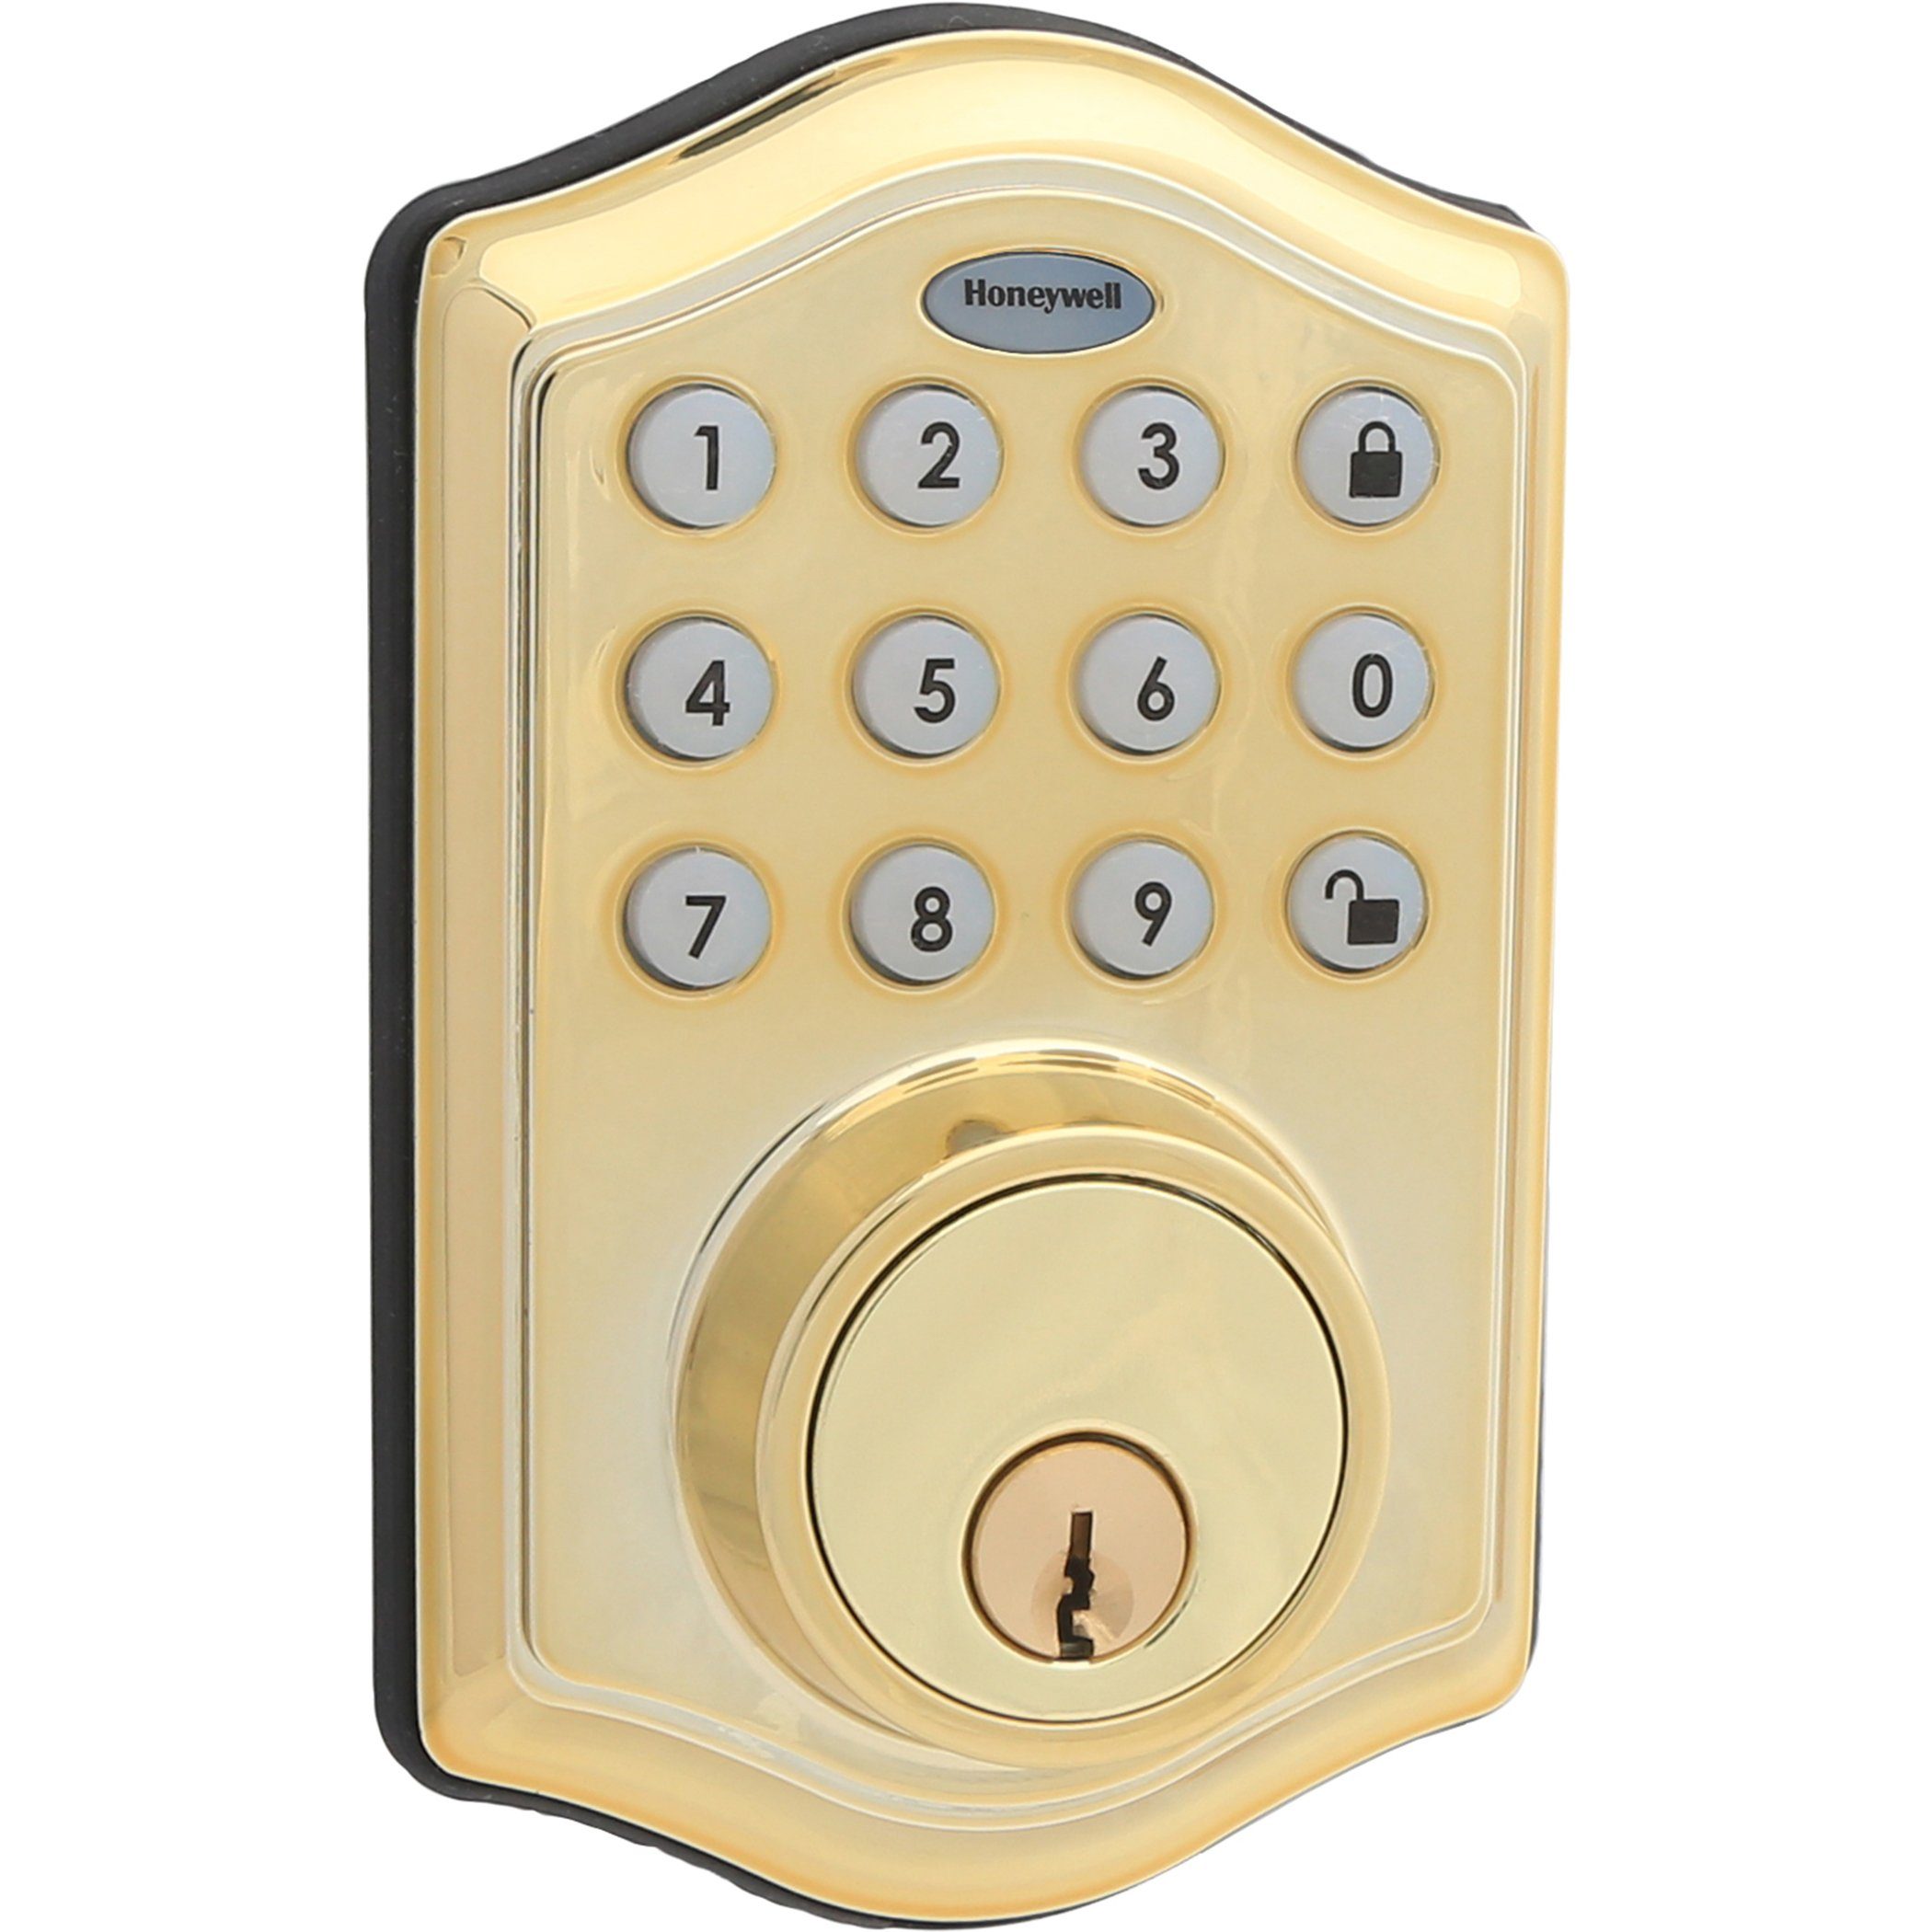 Honeywell 8712009 Electronic Deadbolt Door Lock with Keypad in